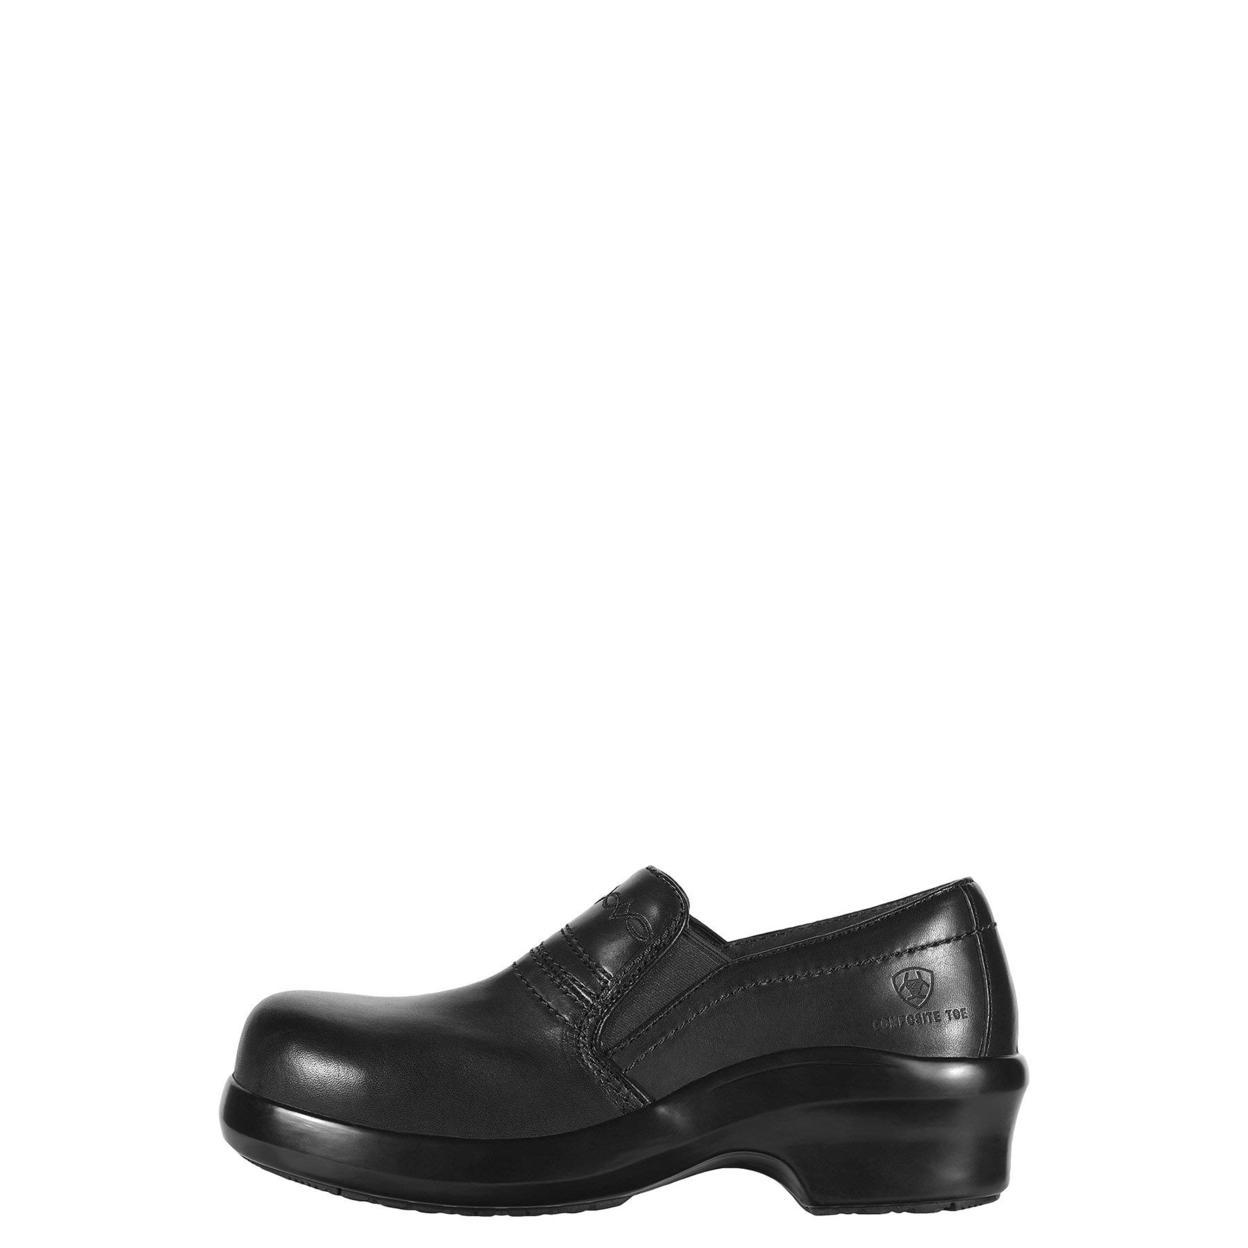 ARIAT WORK Women's Expert Safety Clog Composite Toe ESD Clog Work Shoes Black - 10011976 BLACK - BLACK, 6-B